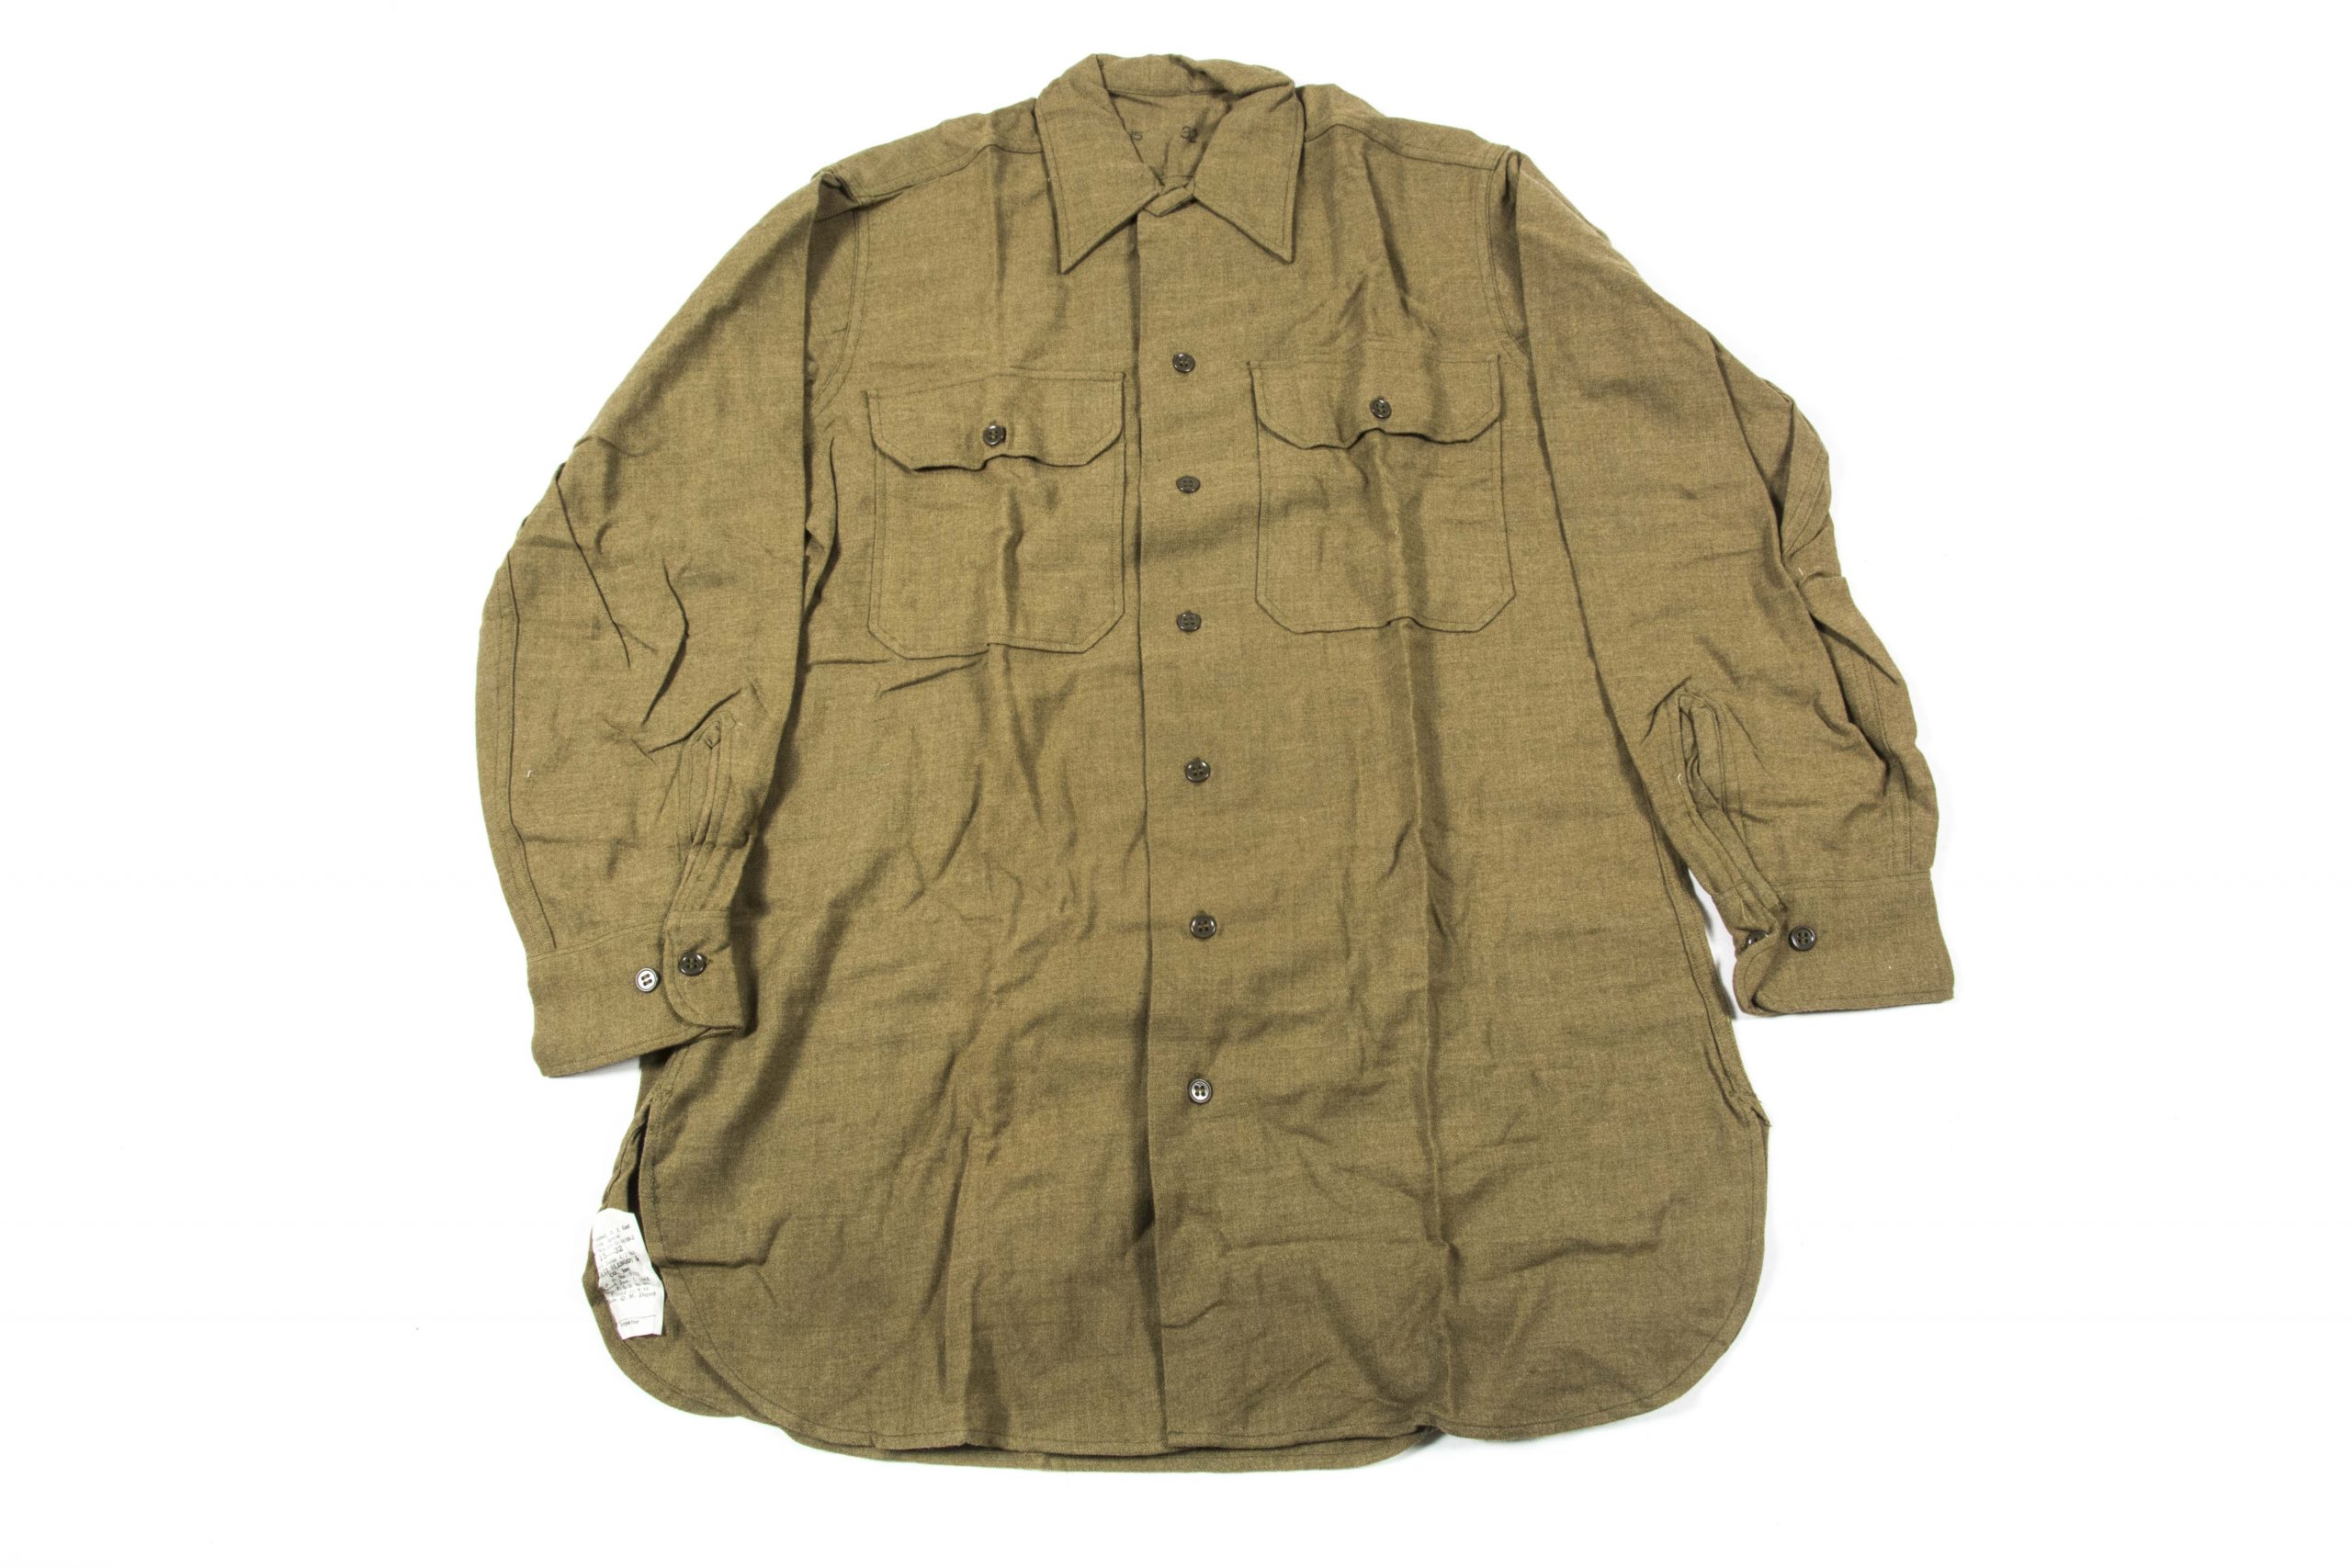 US Wool shirt, special size 15-32, Cluett Peabody & Co inc. – fjm44